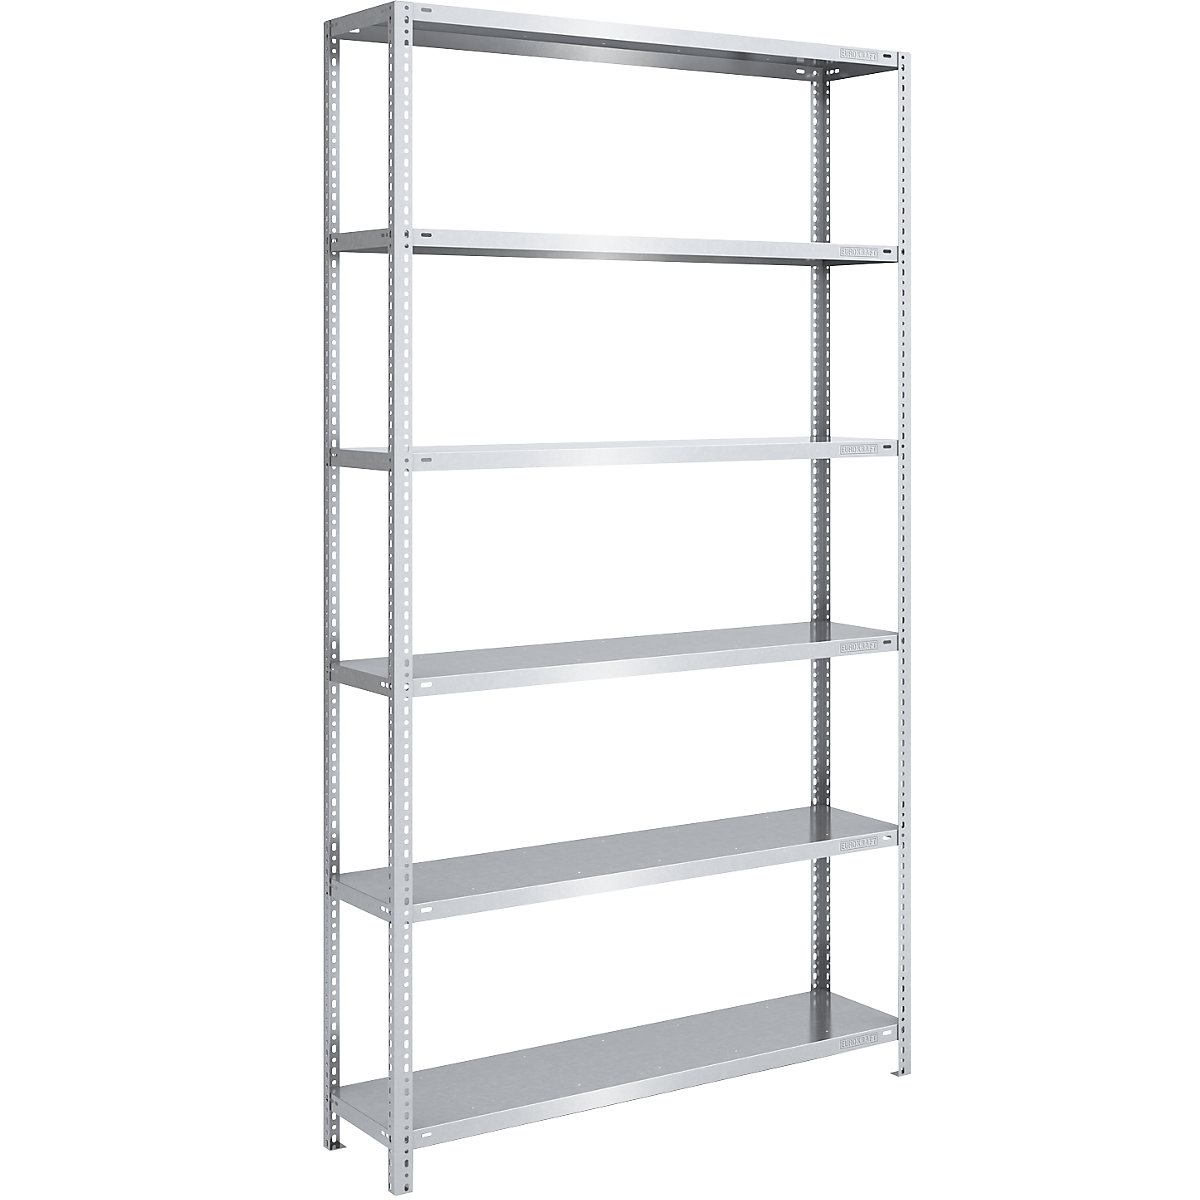 Bolt-together shelf unit, light duty, zinc plated – eurokraft pro, shelf unit height 2500 mm, shelf width 1300 mm, depth 400 mm, standard shelf unit-9